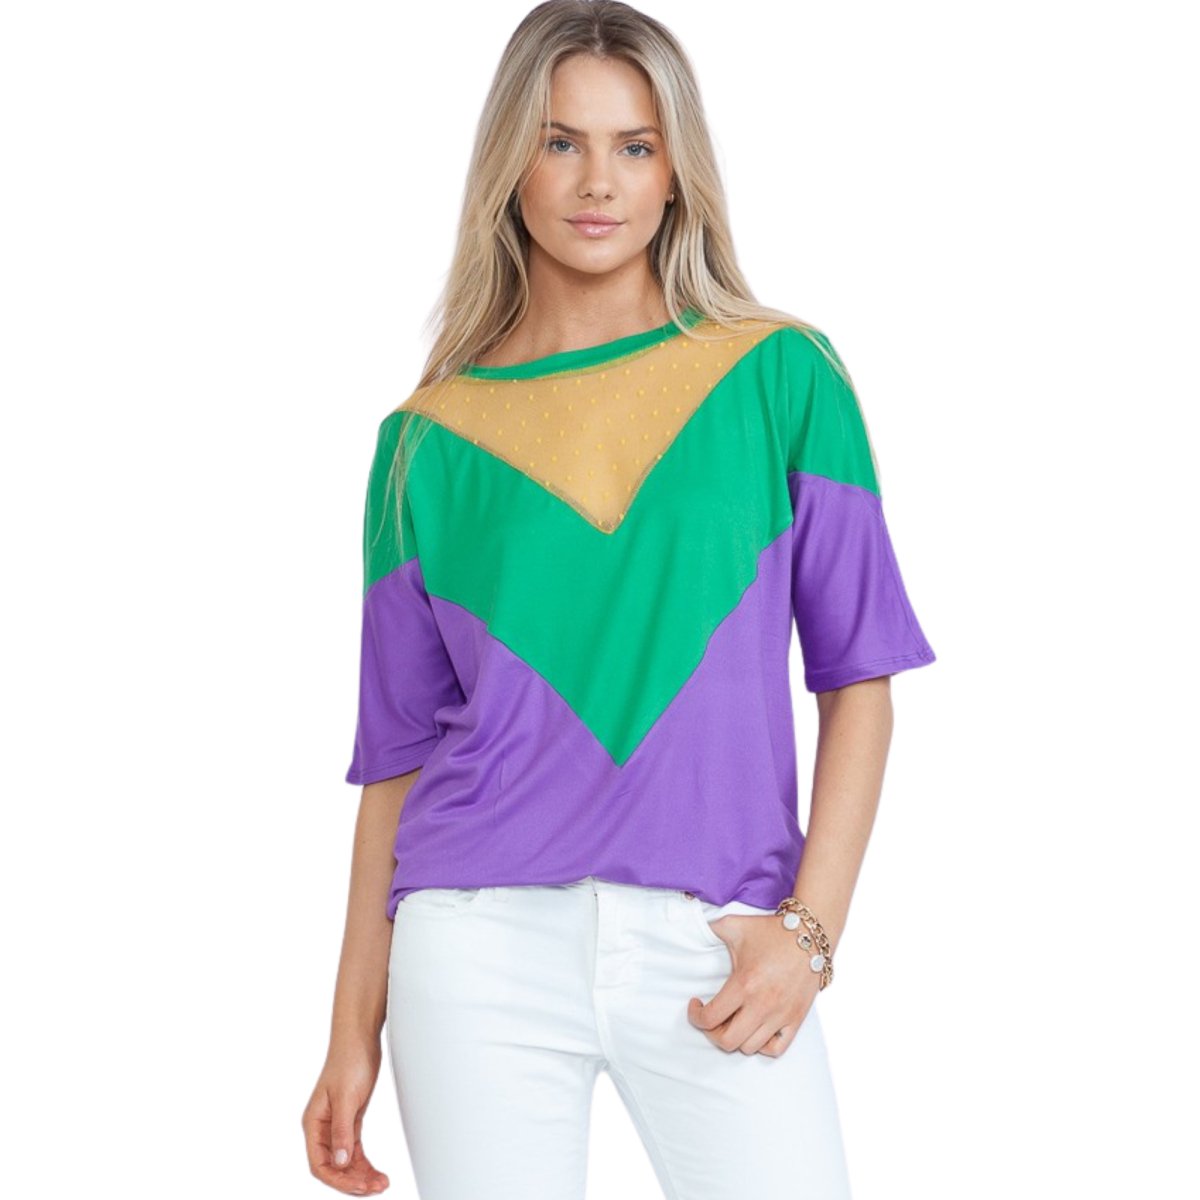 Mardi Gras Green & Purple Color Block Short Sleeve Tunic Top - Mardi Gras Apparel